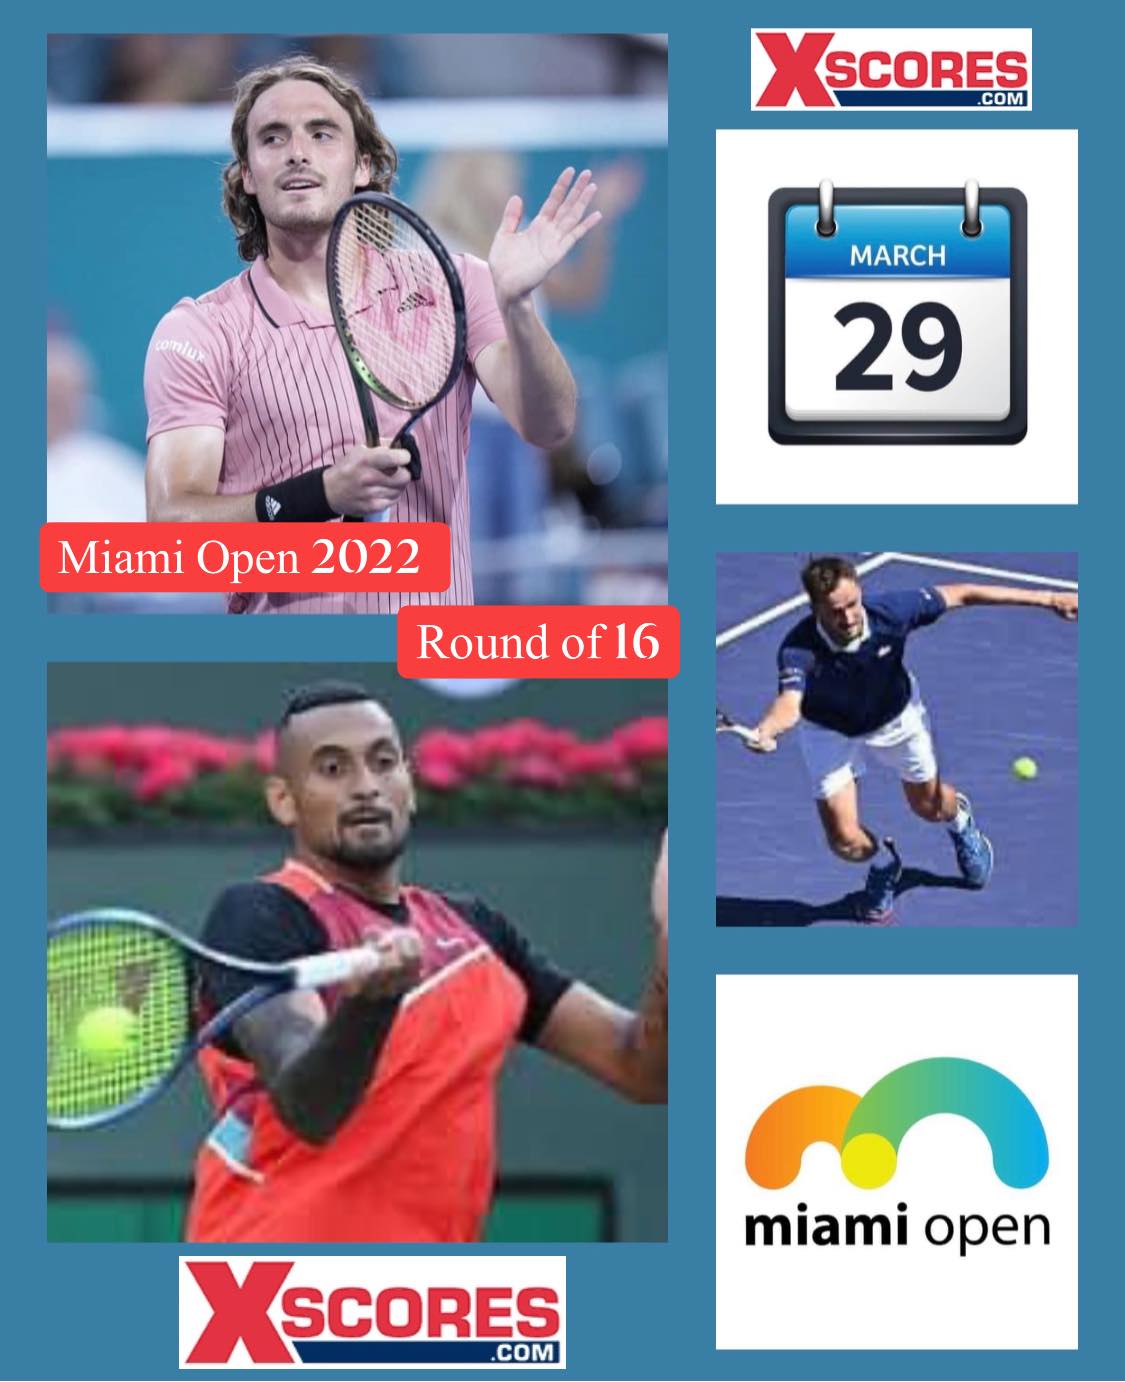 ATP - Tennis news & results - Eurosport